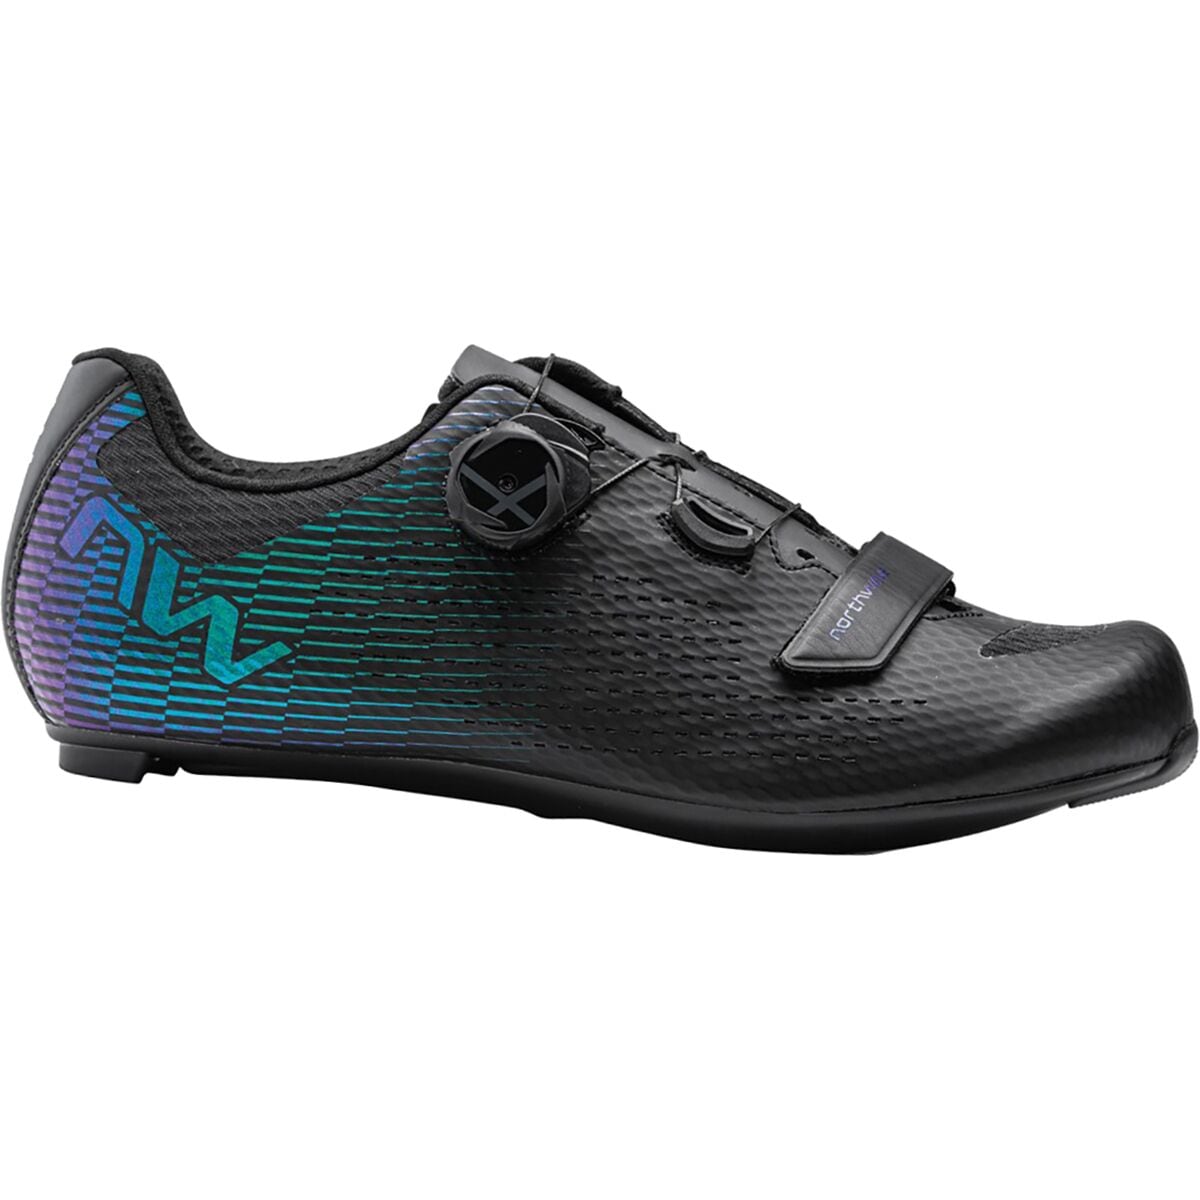 Northwave Storm Carbon 2 Cycling Shoe - Men's Black/Iridescent, 45.0